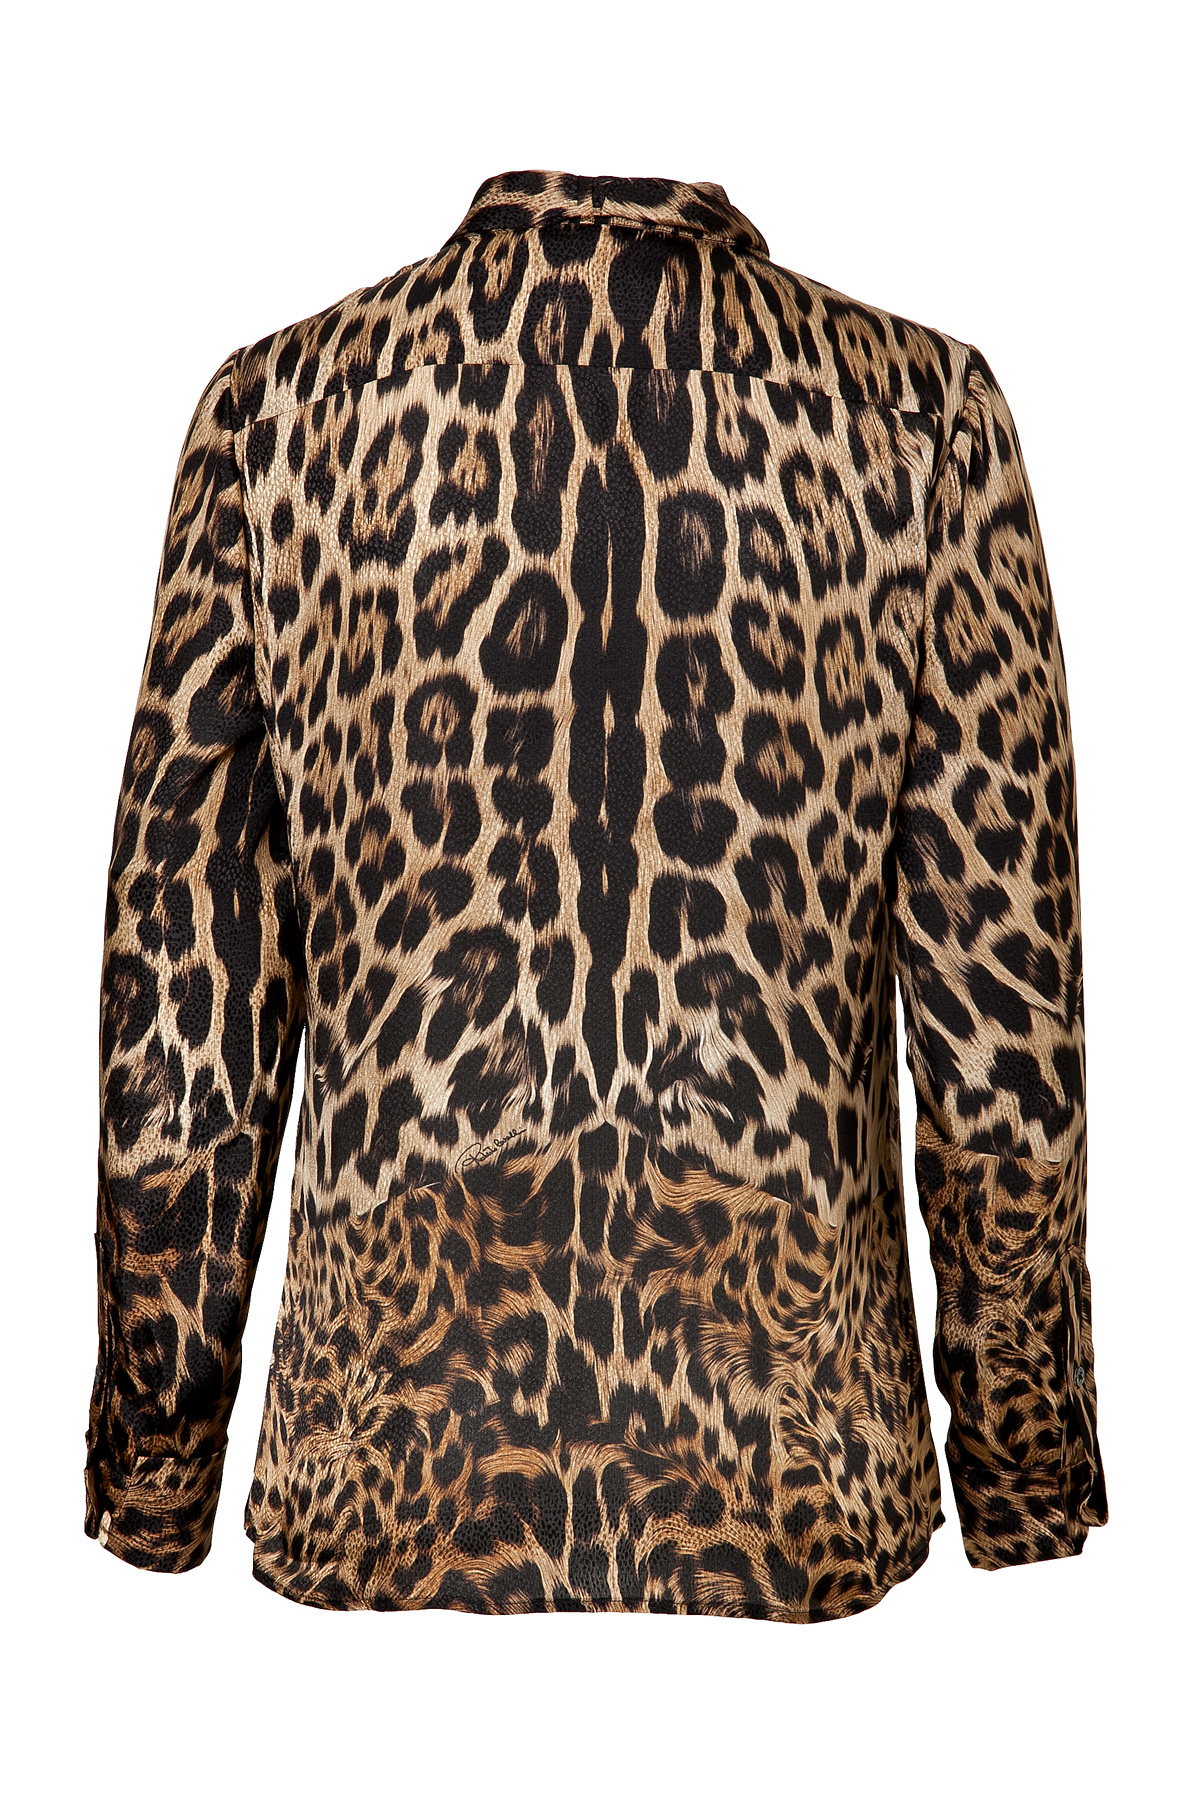 Roberto Cavalli Leopard Print Tie Neck Blouse - Animal Prints in Brown ...